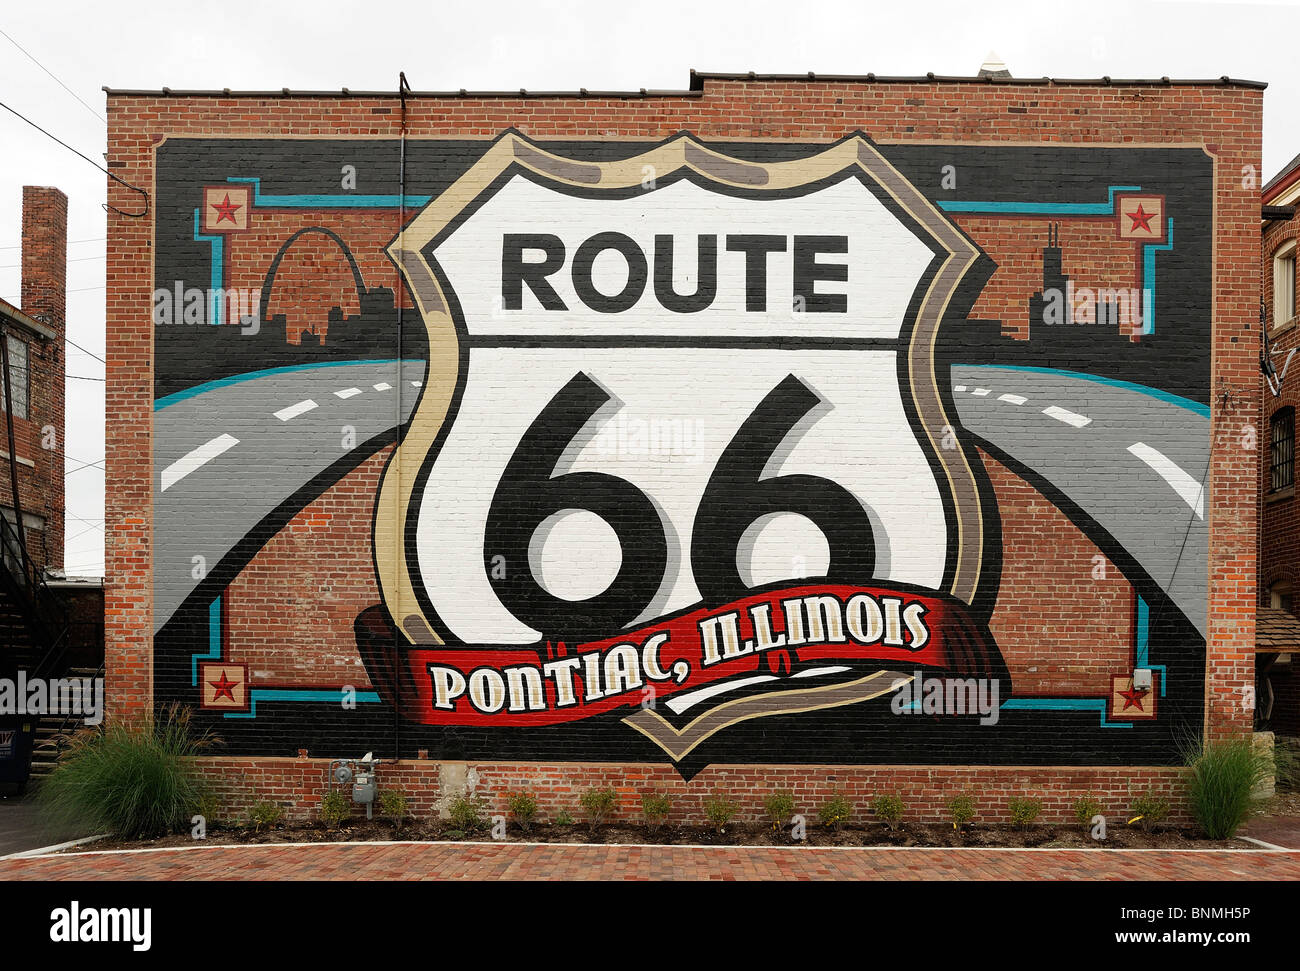 Mural de Route 66 Route 66 nostalgia Pontiac Illinois Estados Unidos signo símbolo de la placa de Norteamérica Foto de stock